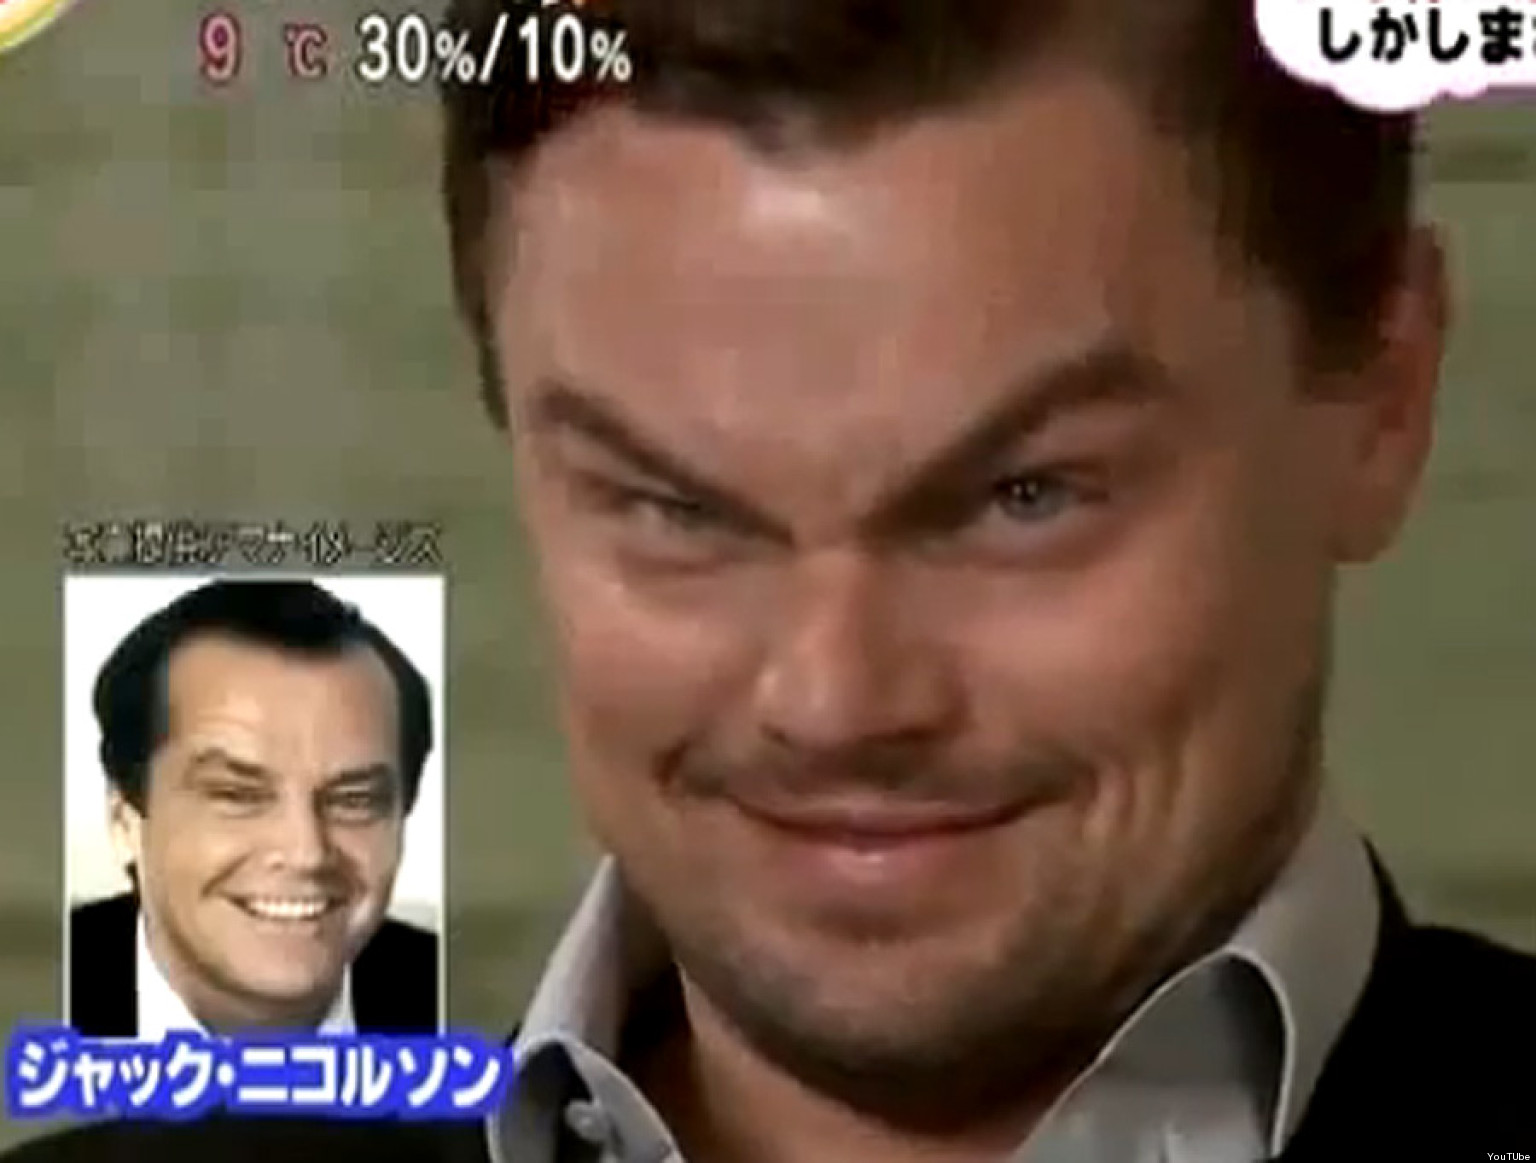 Leonardo DiCaprio Does A Mean Jack Nicholson Impression (VIDEO) | HuffPost UK1536 x 1163